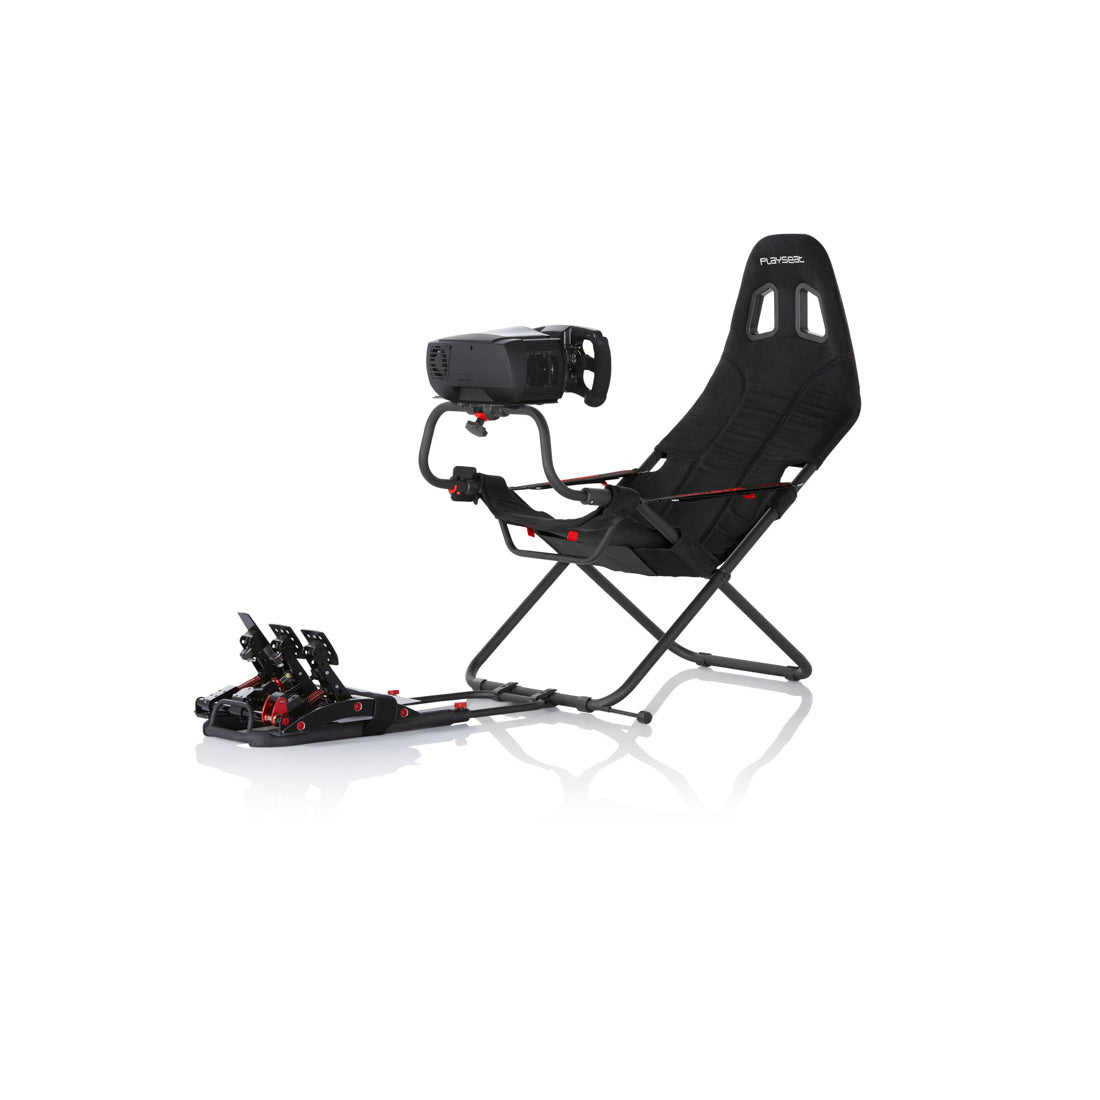 PlaySeat - Challenge Racing Chair